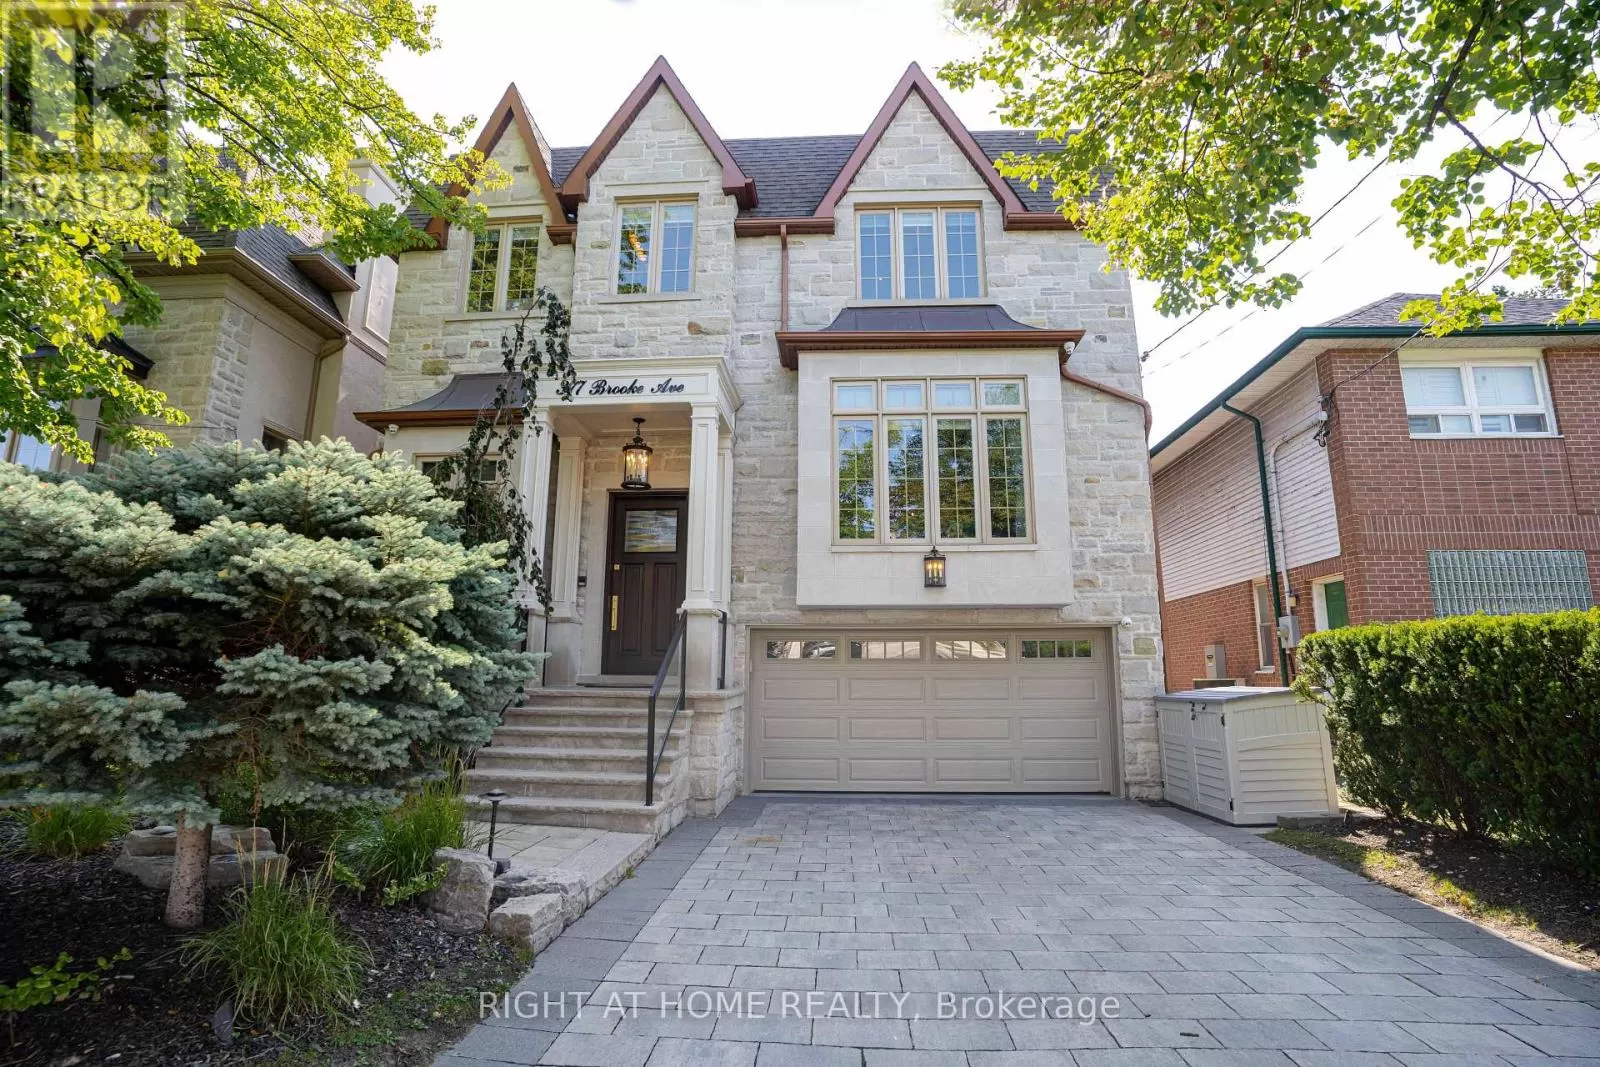 House for rent: 377 Brooke Avenue, Toronto, Ontario M5M 2L5